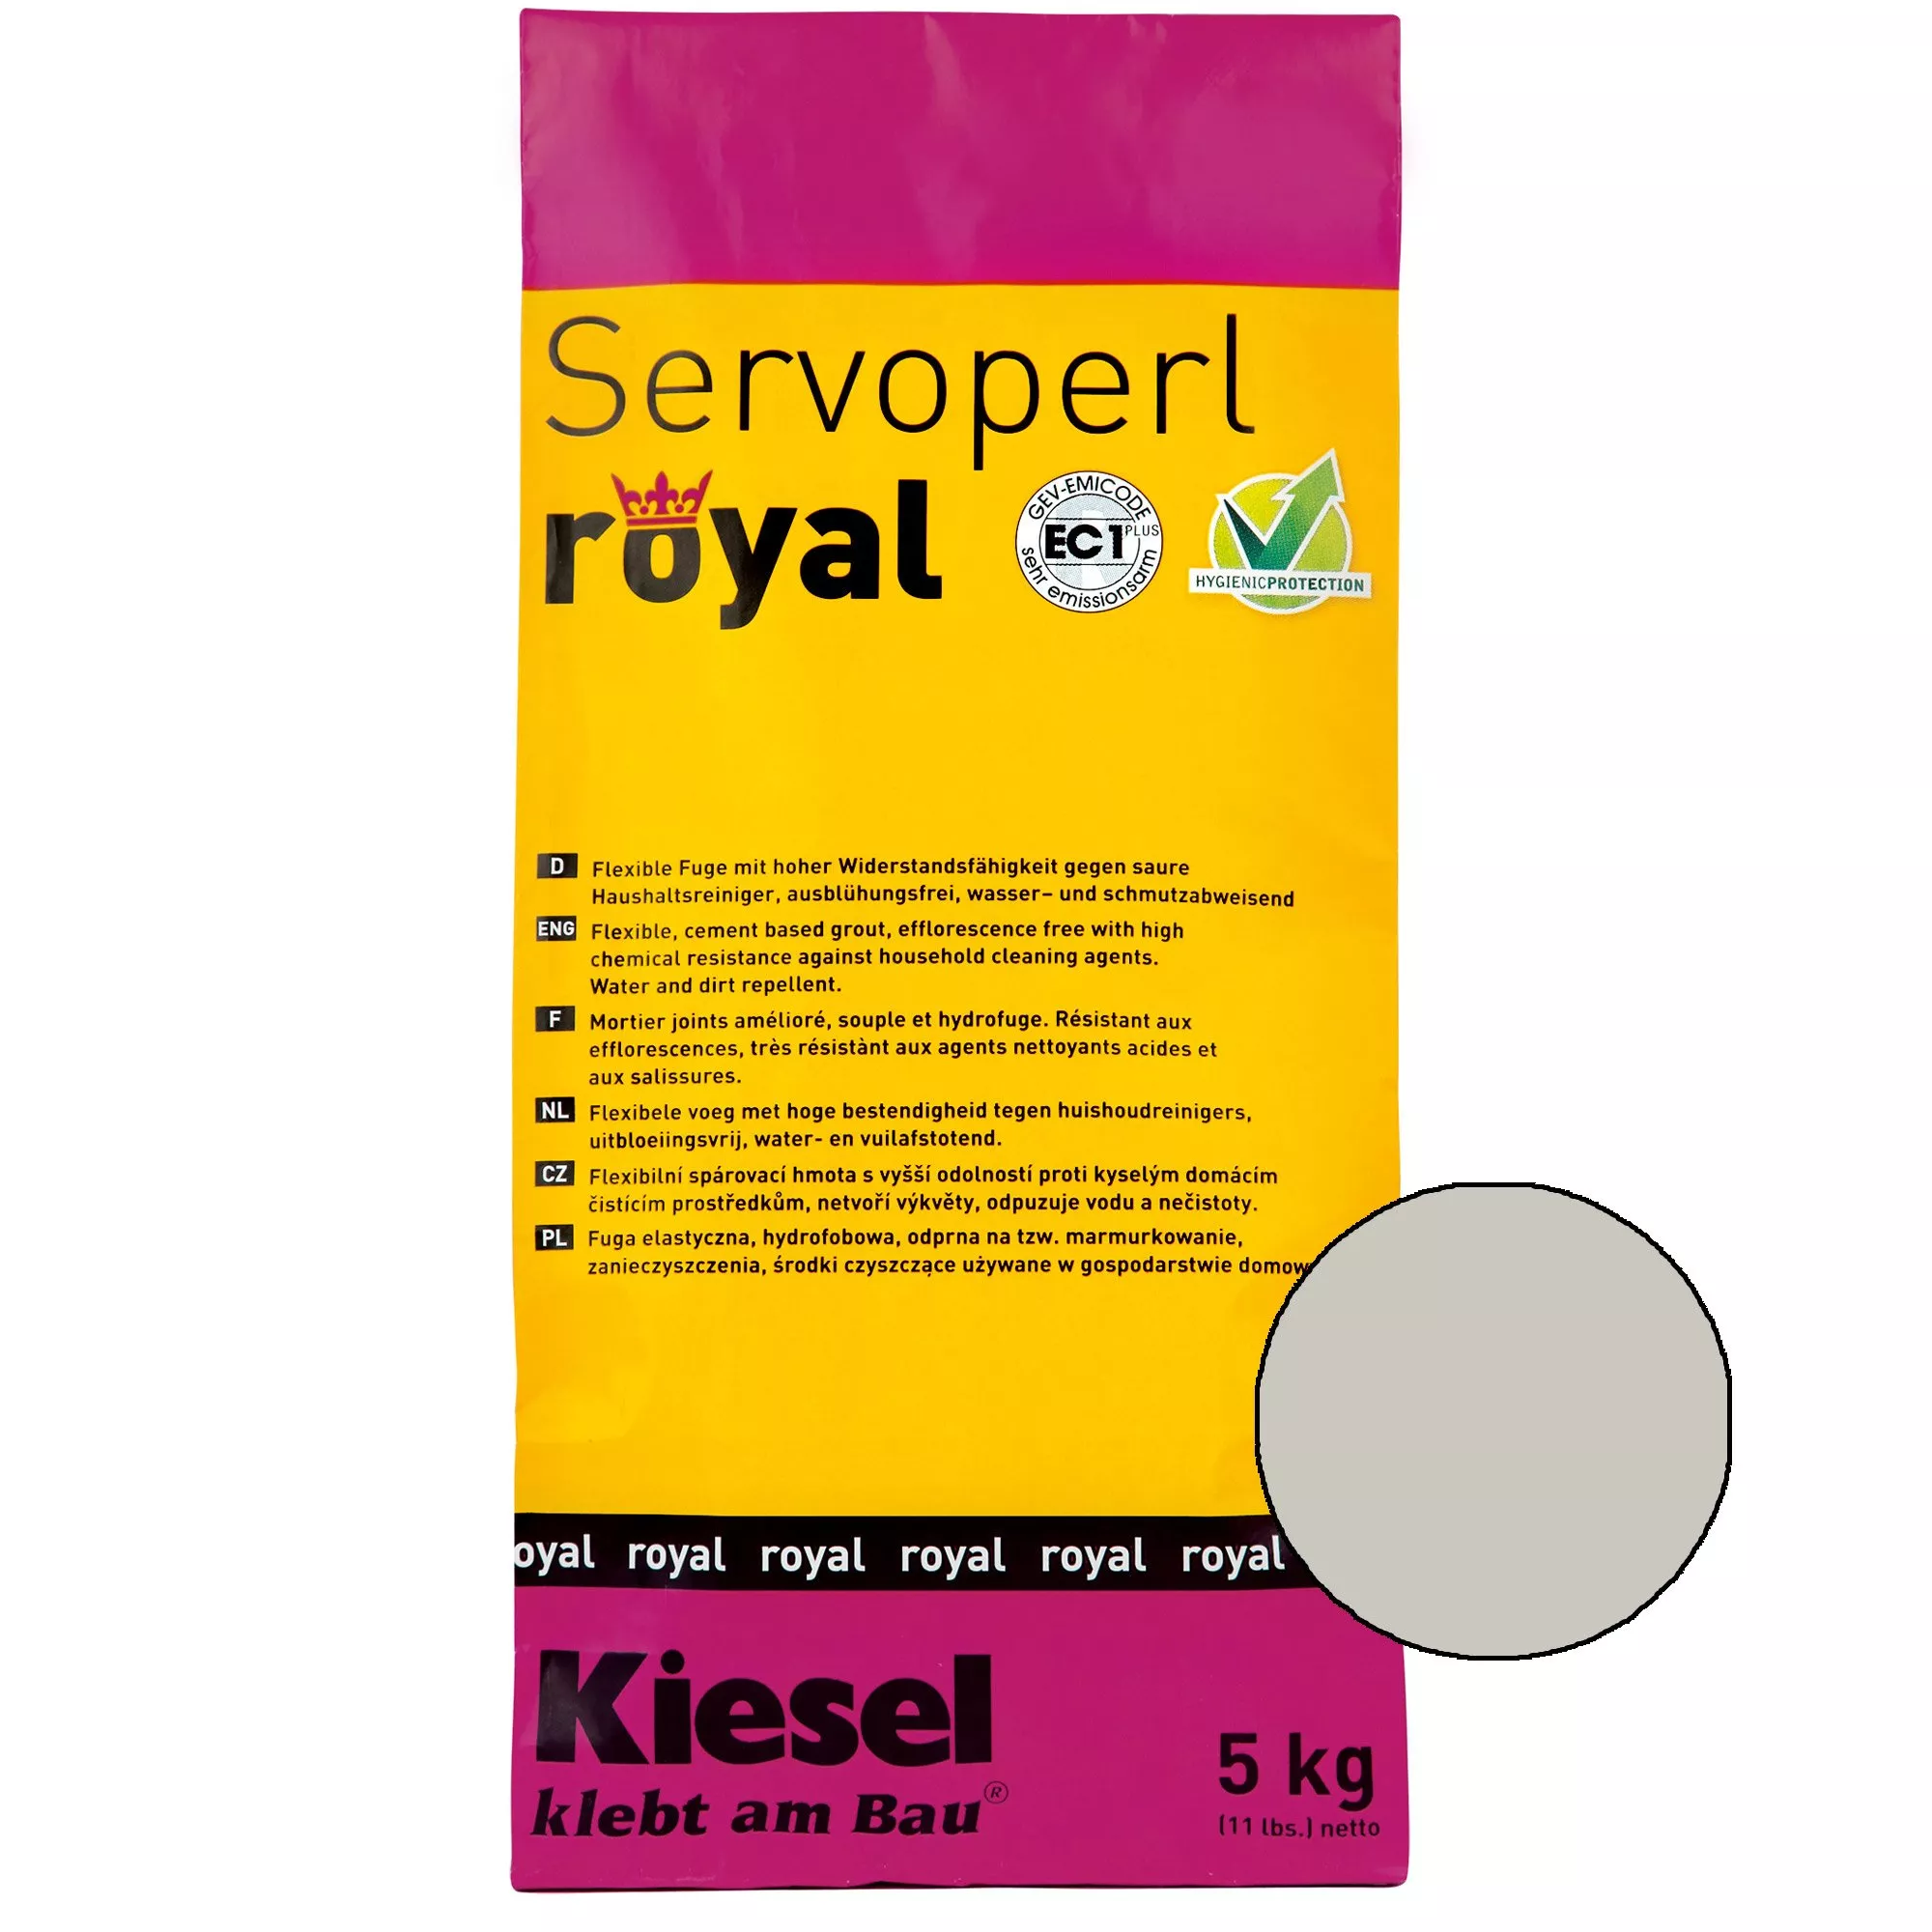 Kiesel Servoperl royal - Giunto flessibile, idrorepellente e antisporco (5KG grigio argento)